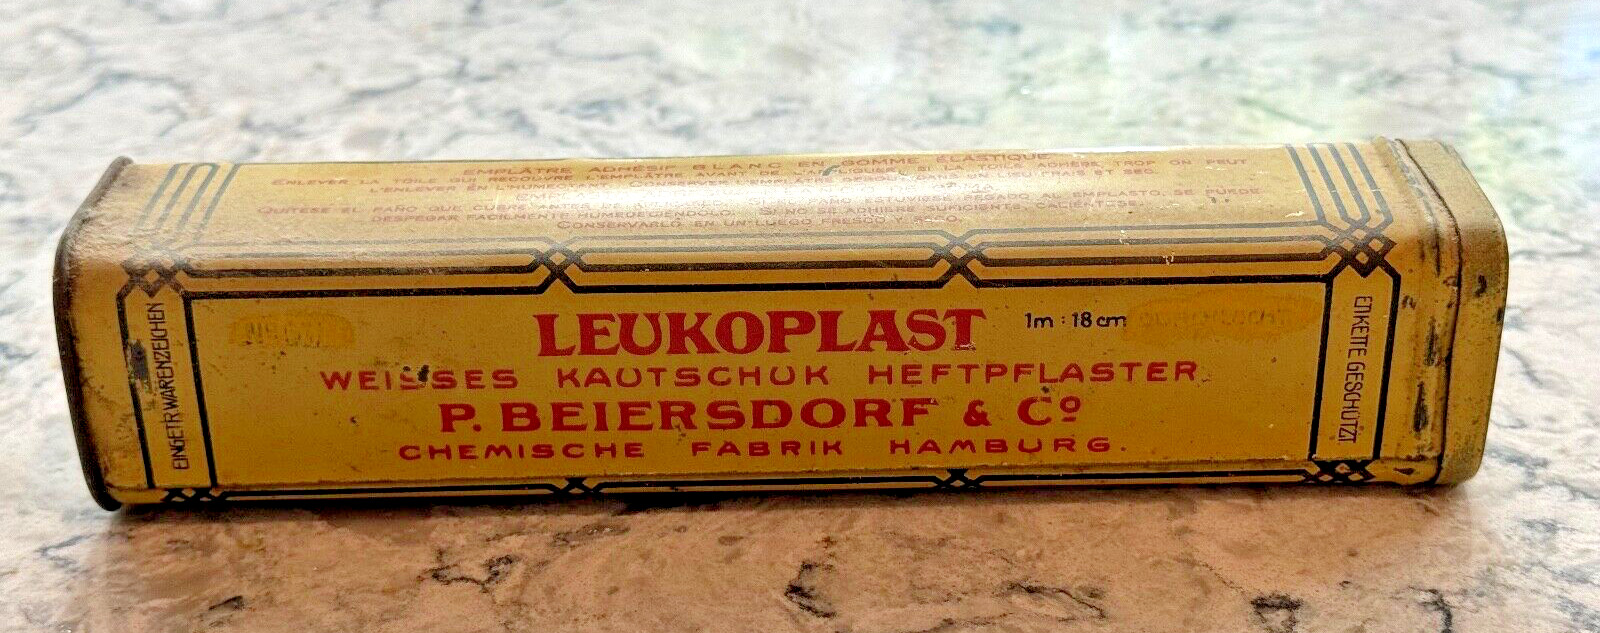 Antique German Leukoplast Plaster Tin P. Beiersdorf & Co. - Hamburg, German Text